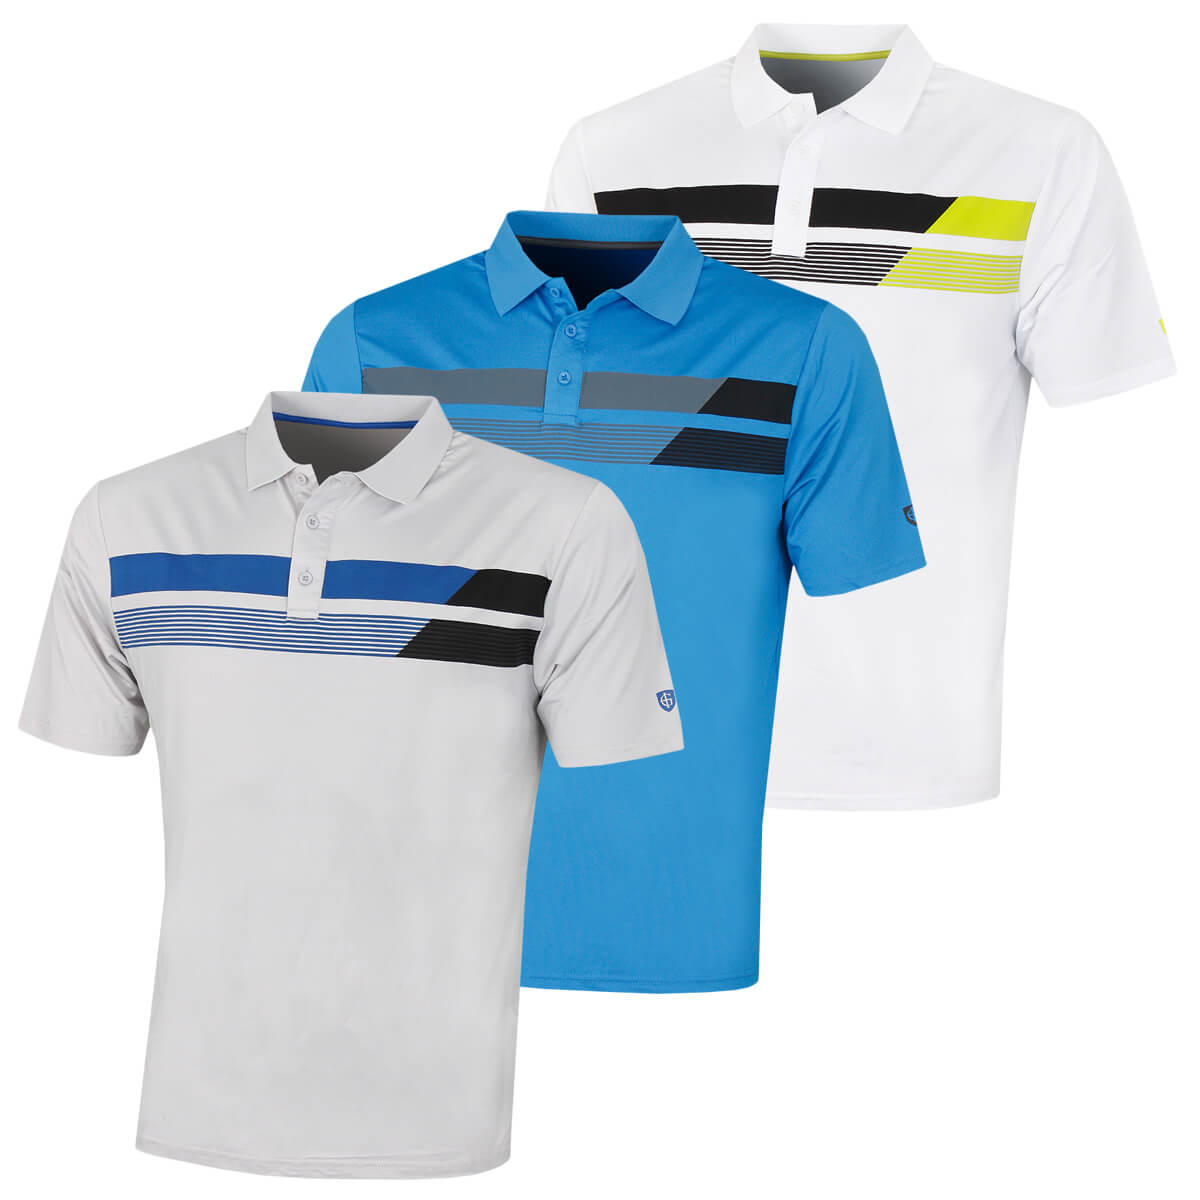 Island  Green Asymmetric Print UV Protection Polo Shirt igts2038